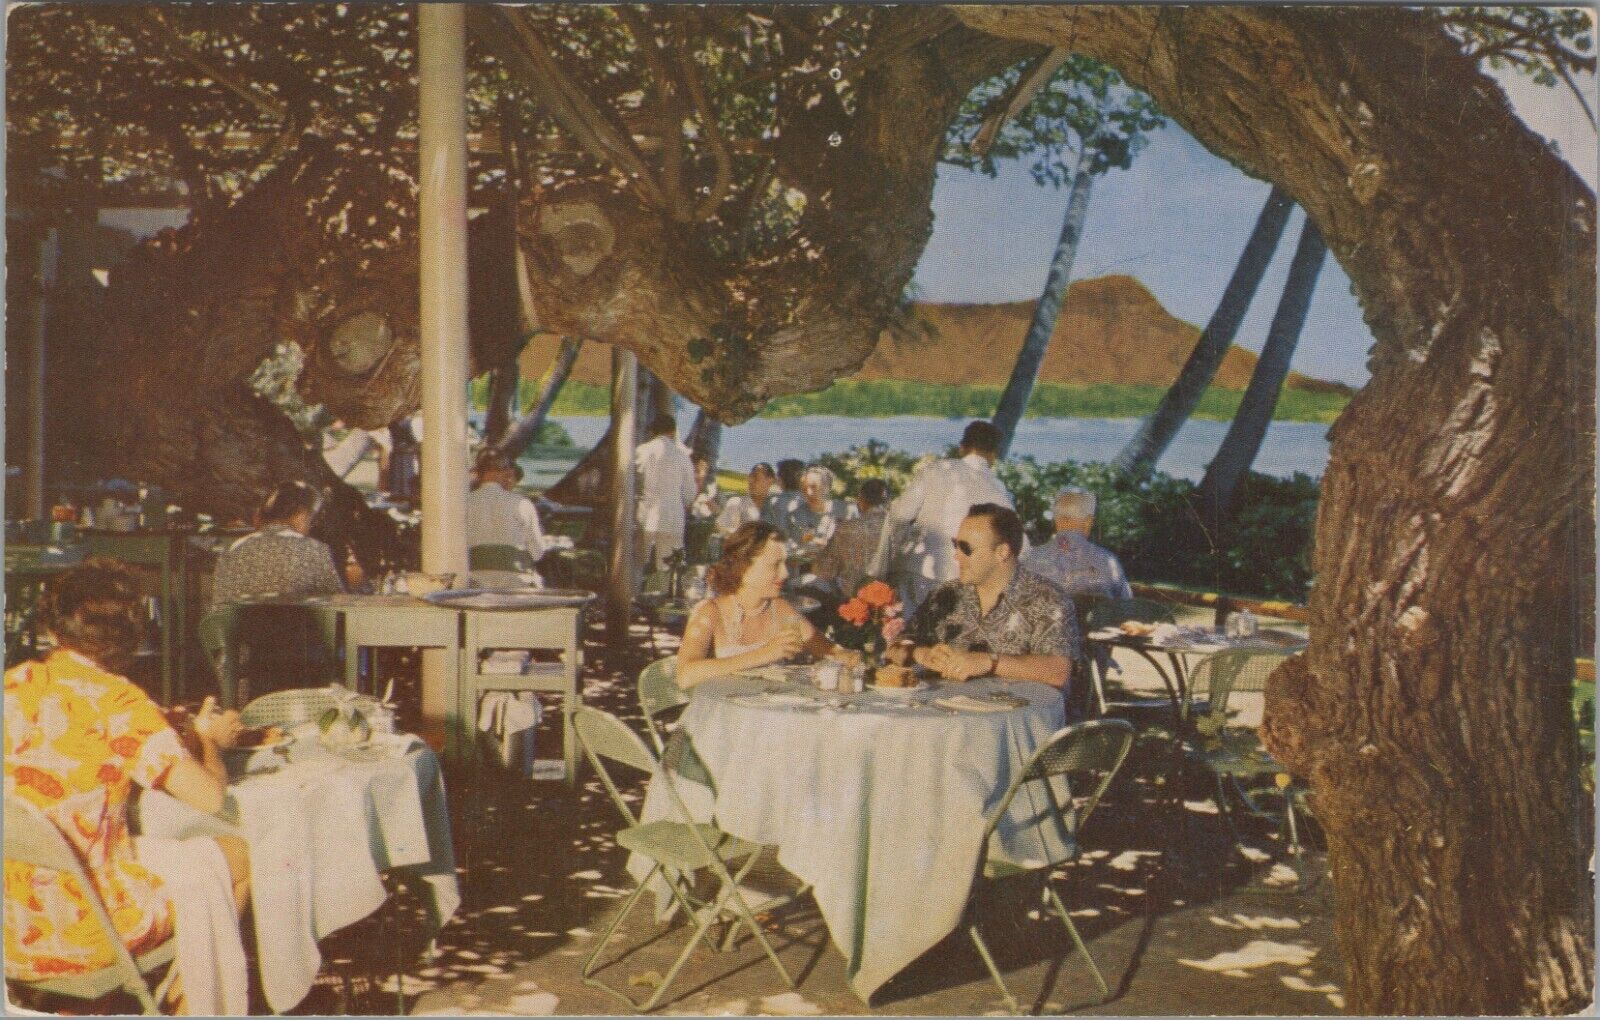 c1960s Halekulani Hotel Waikiki Honolulu Hawaii coral lanai dining postcard B552